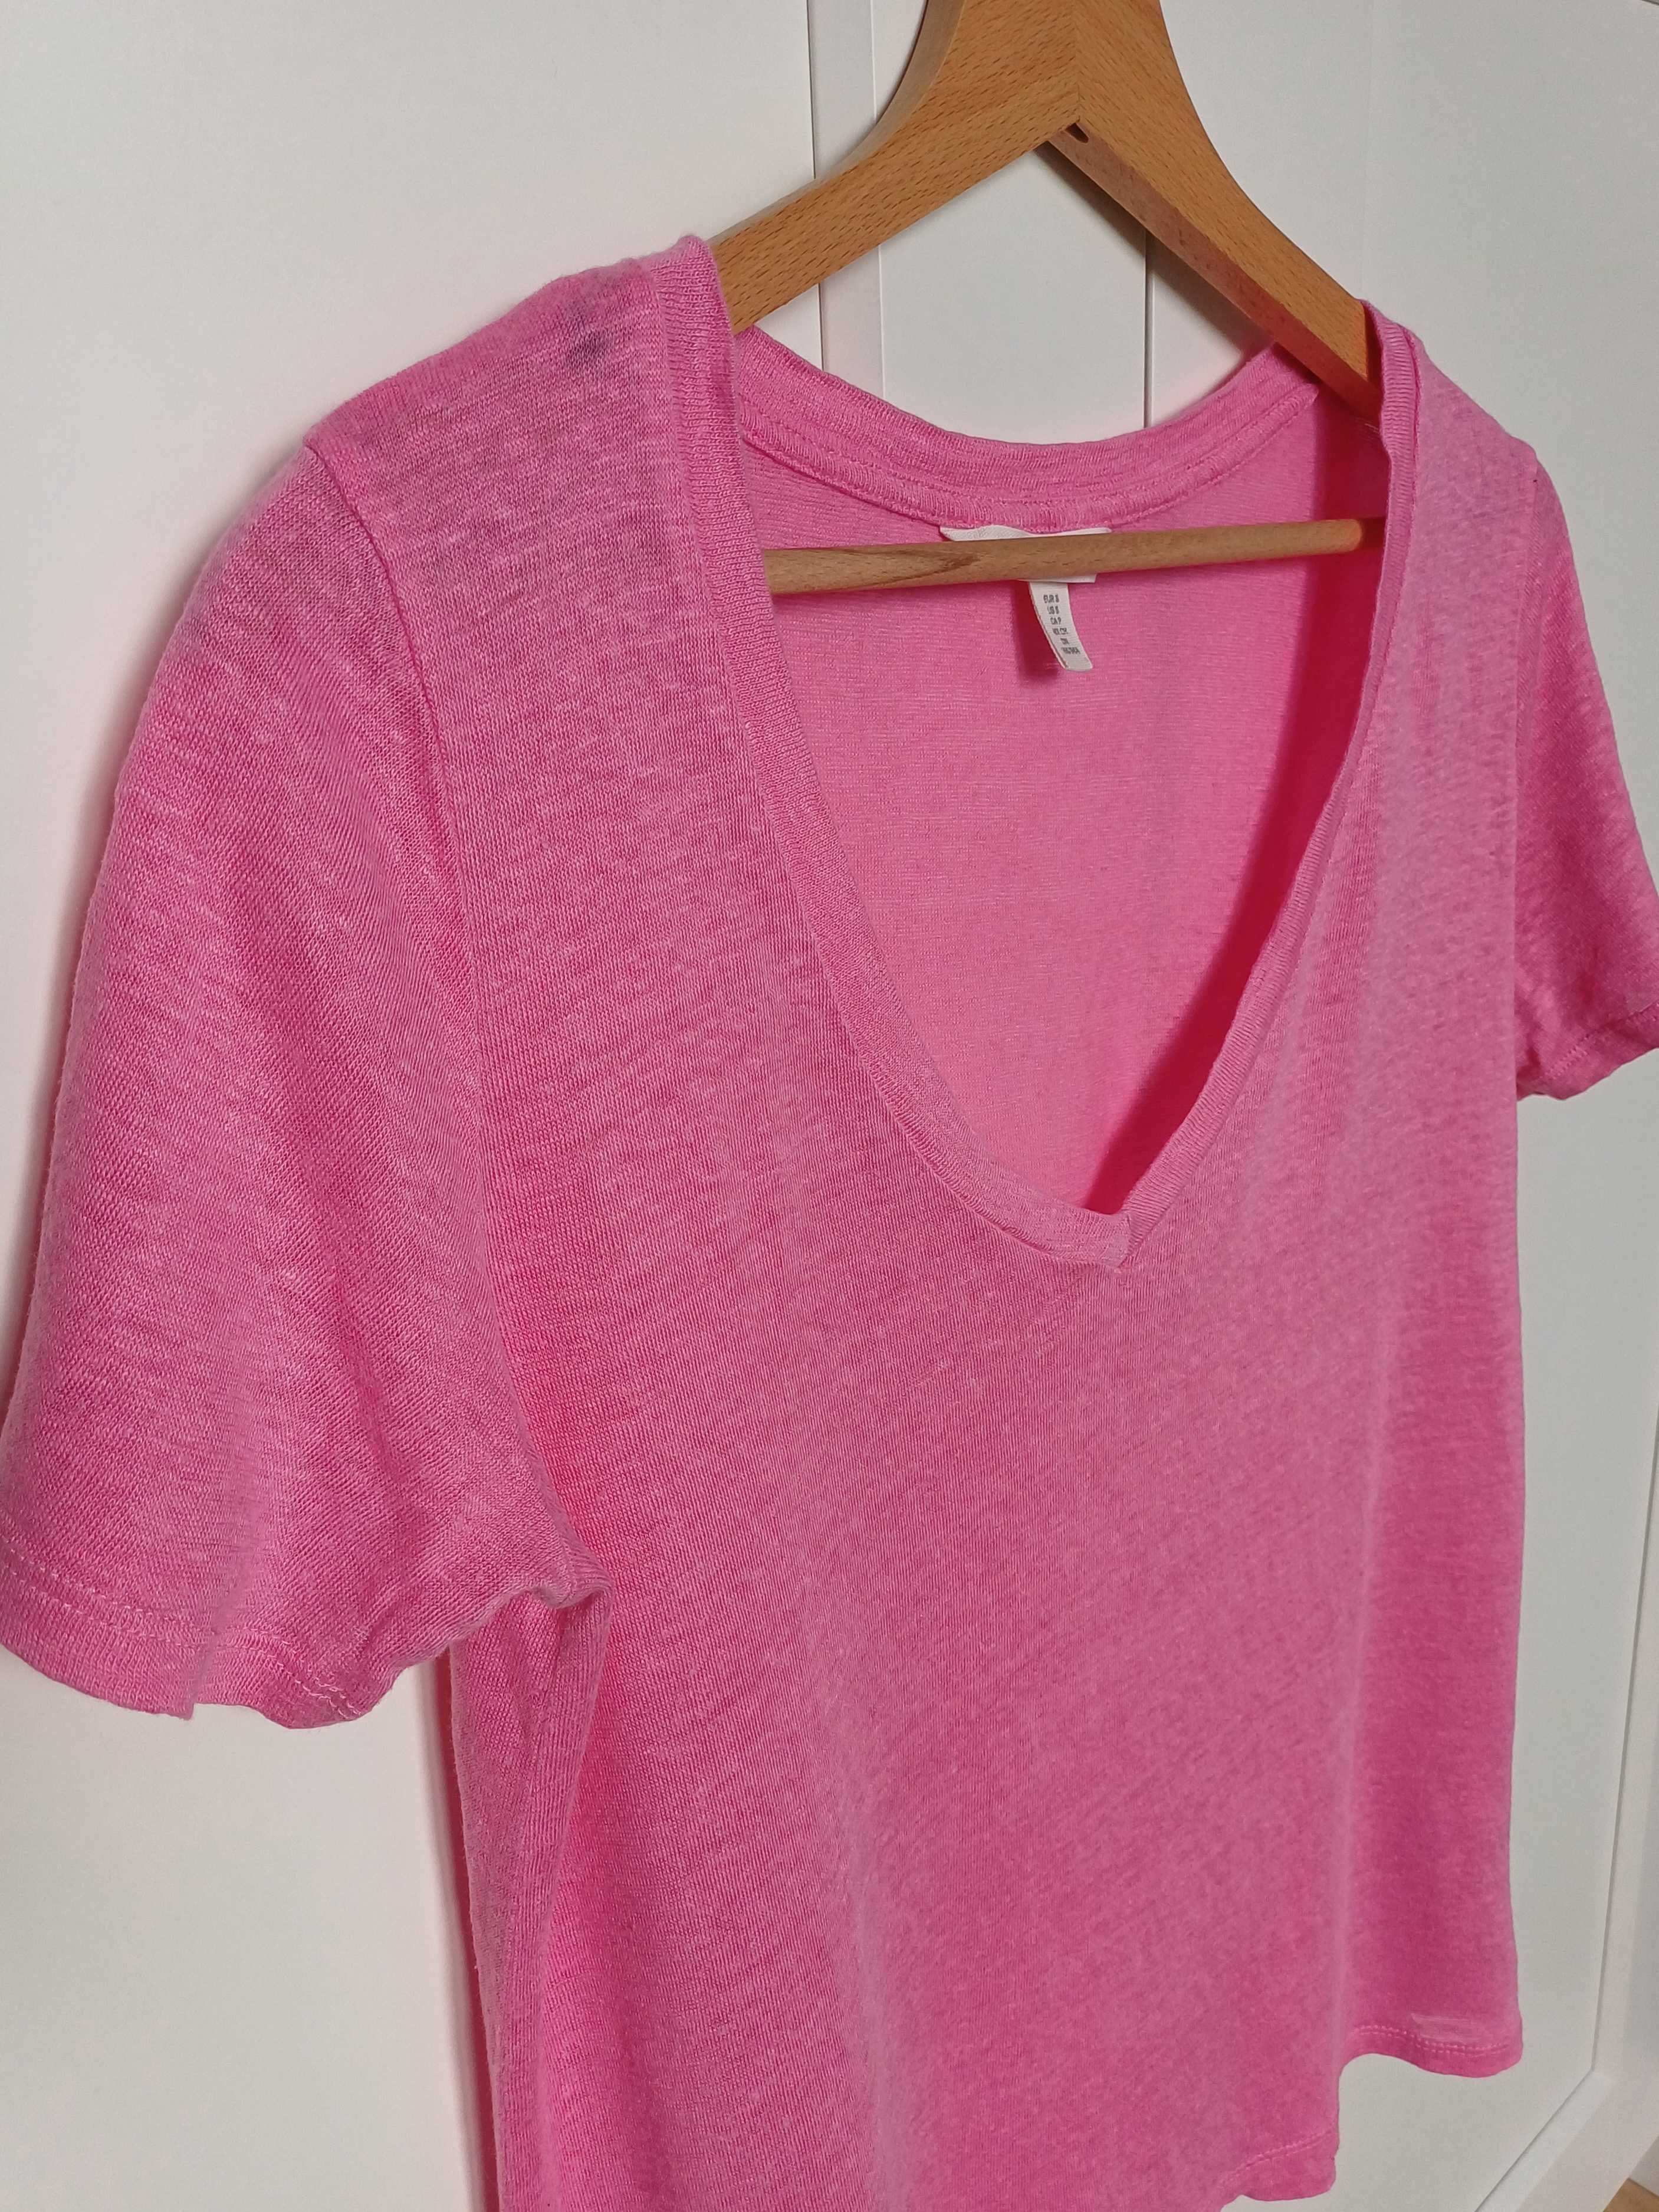 Lniana koszulka/t-shirt H&M rozm. S różowa